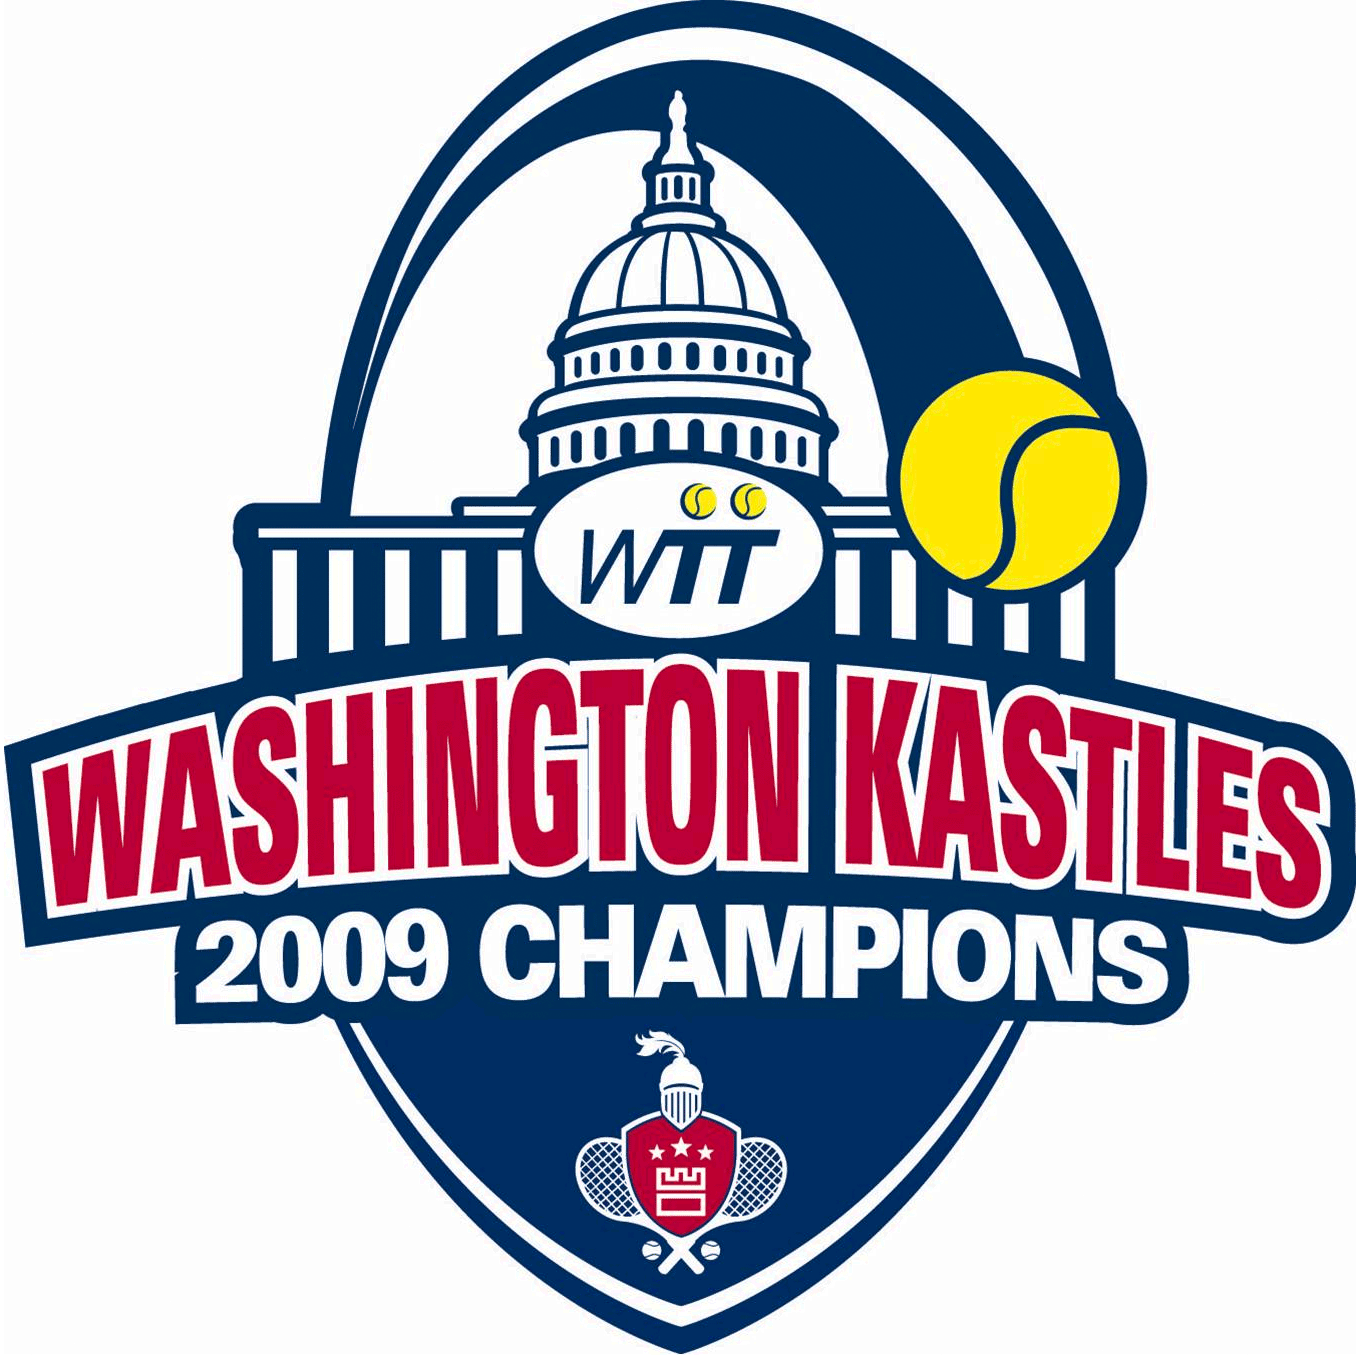 Washington Kastles 2009 Champion Logo iron on transfers for clothing